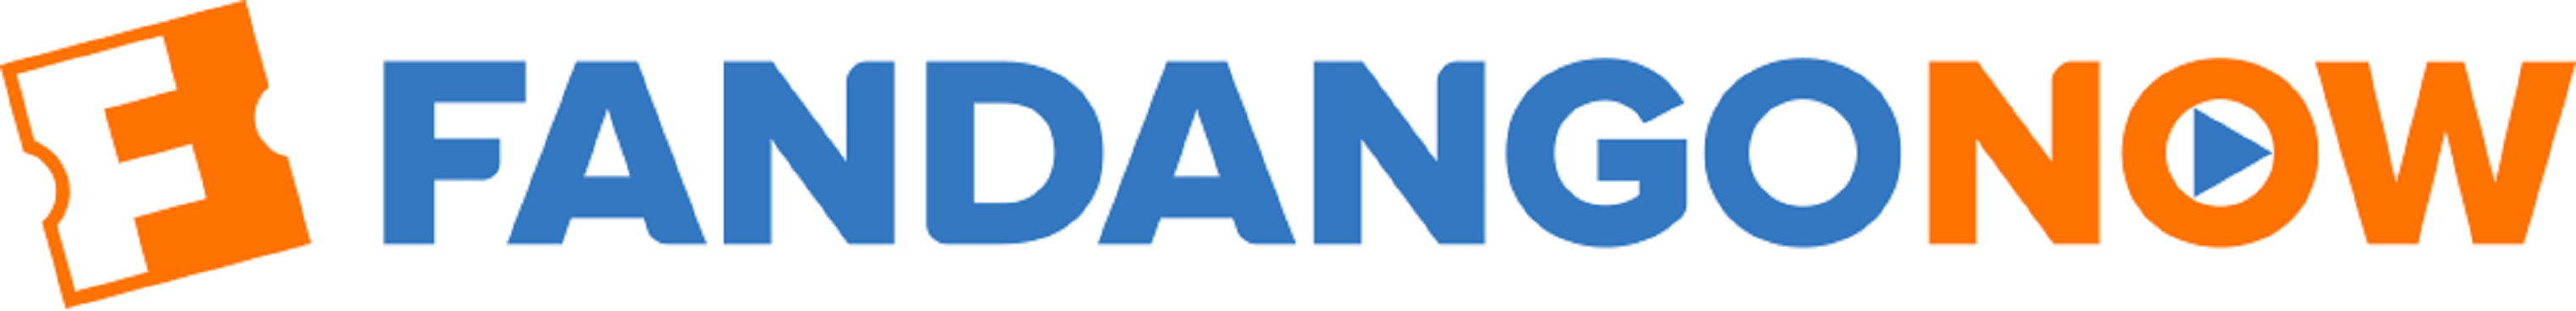 Fandango Now Logo - Fandango to Launch Premium Video Service This Month. Den of Geek